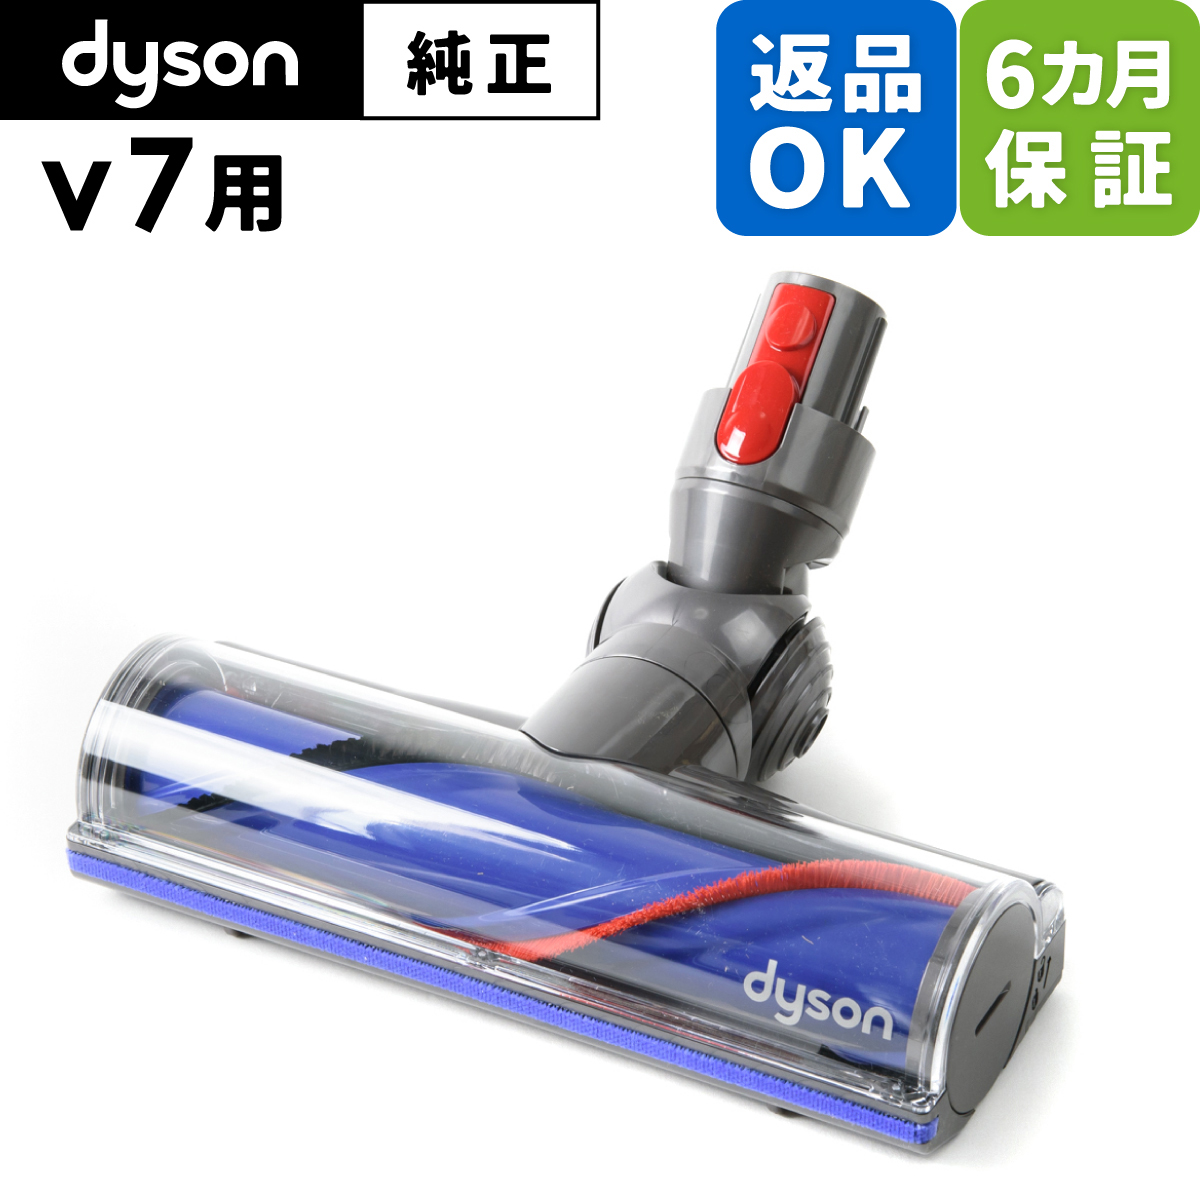 dyson ダイレクトドライブクリーナーヘッド パーツ 掃除機の人気商品